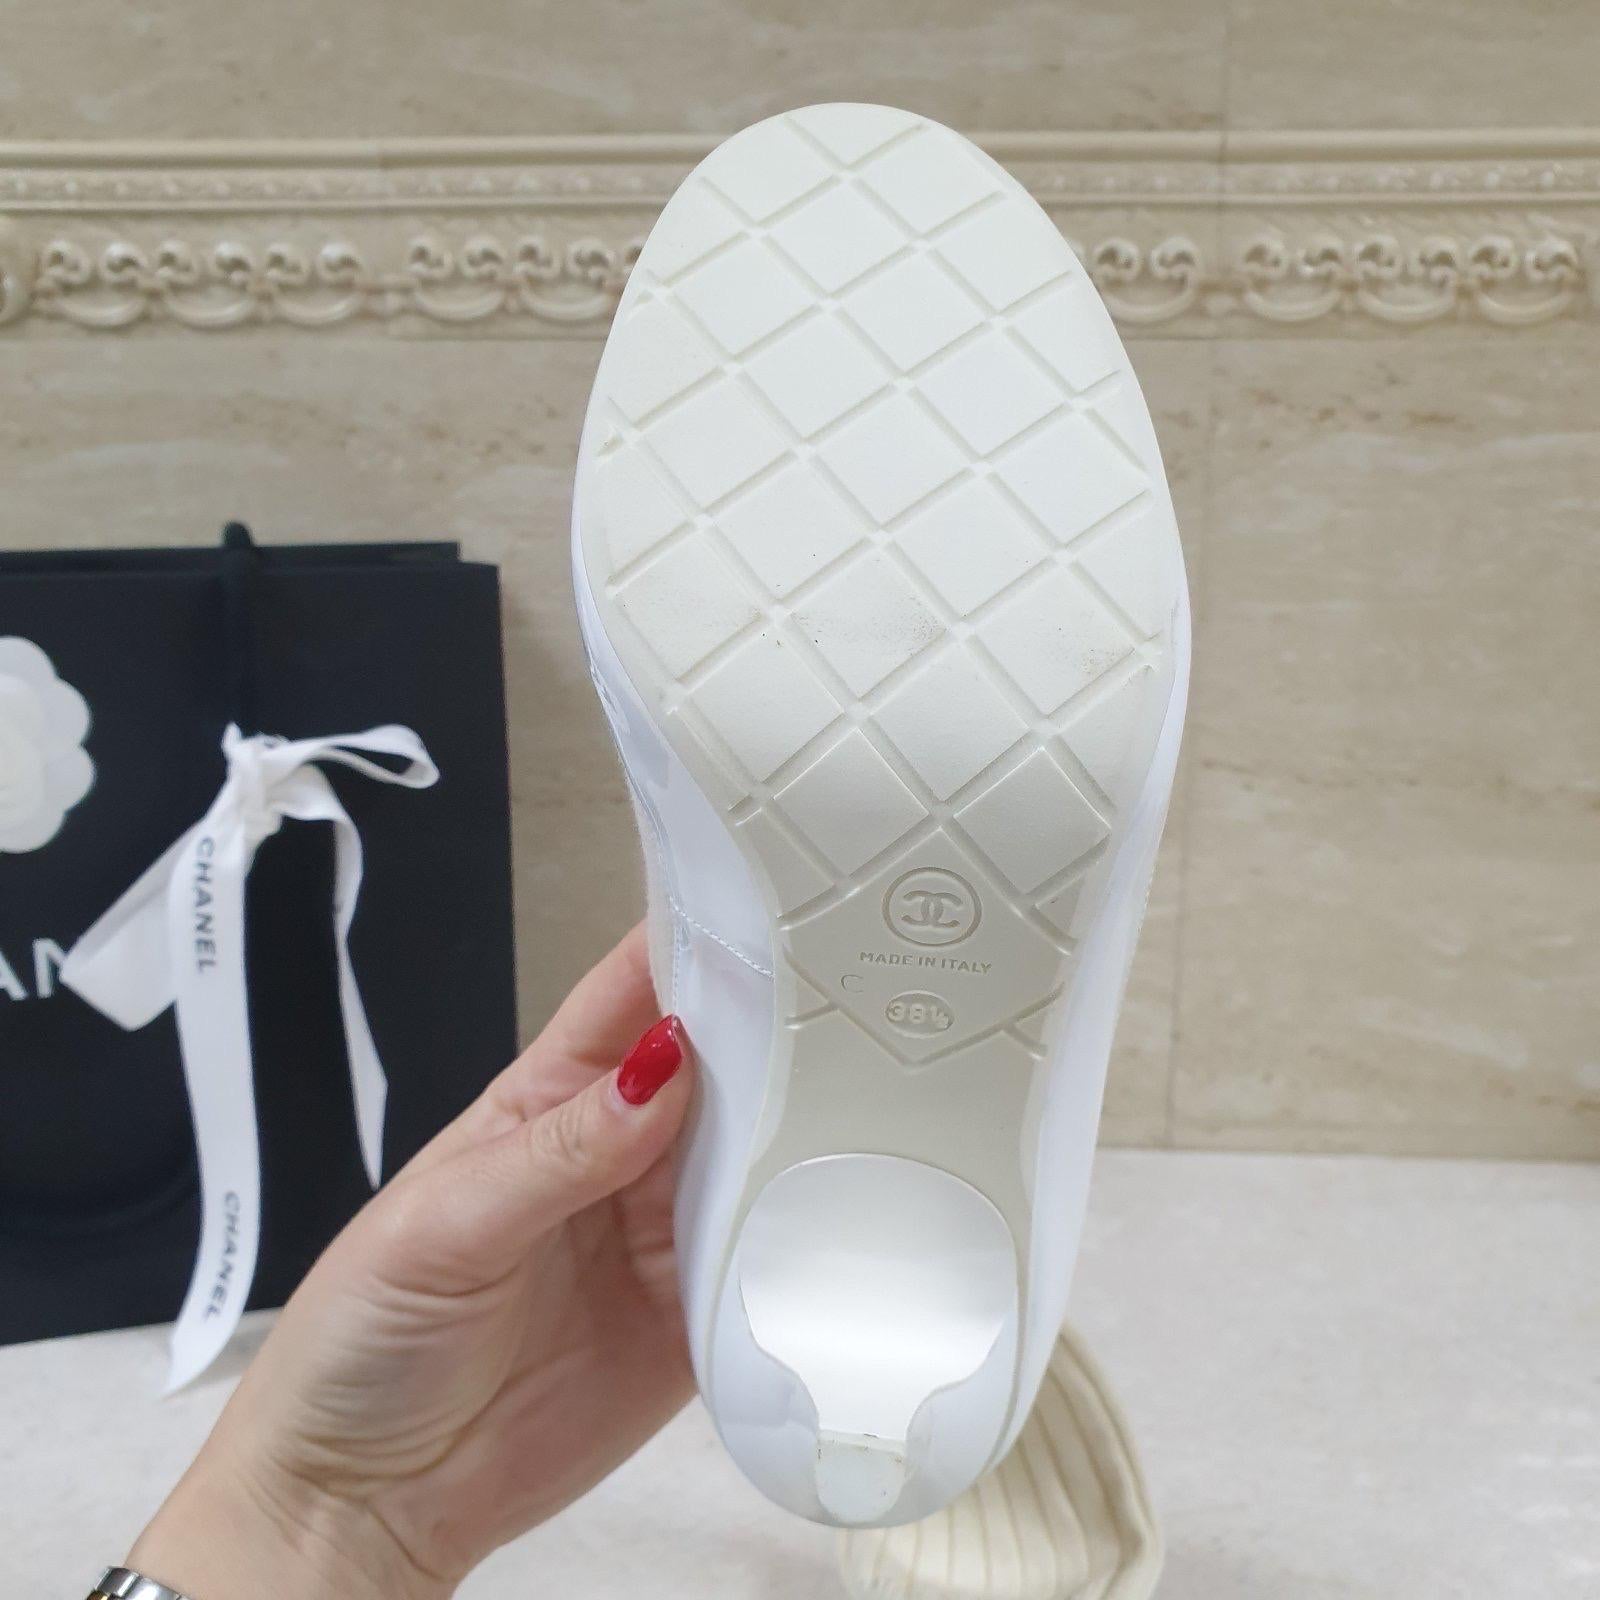 CHANEL Paris Dubai White Patent Leather Knitted Pumps Heels 3